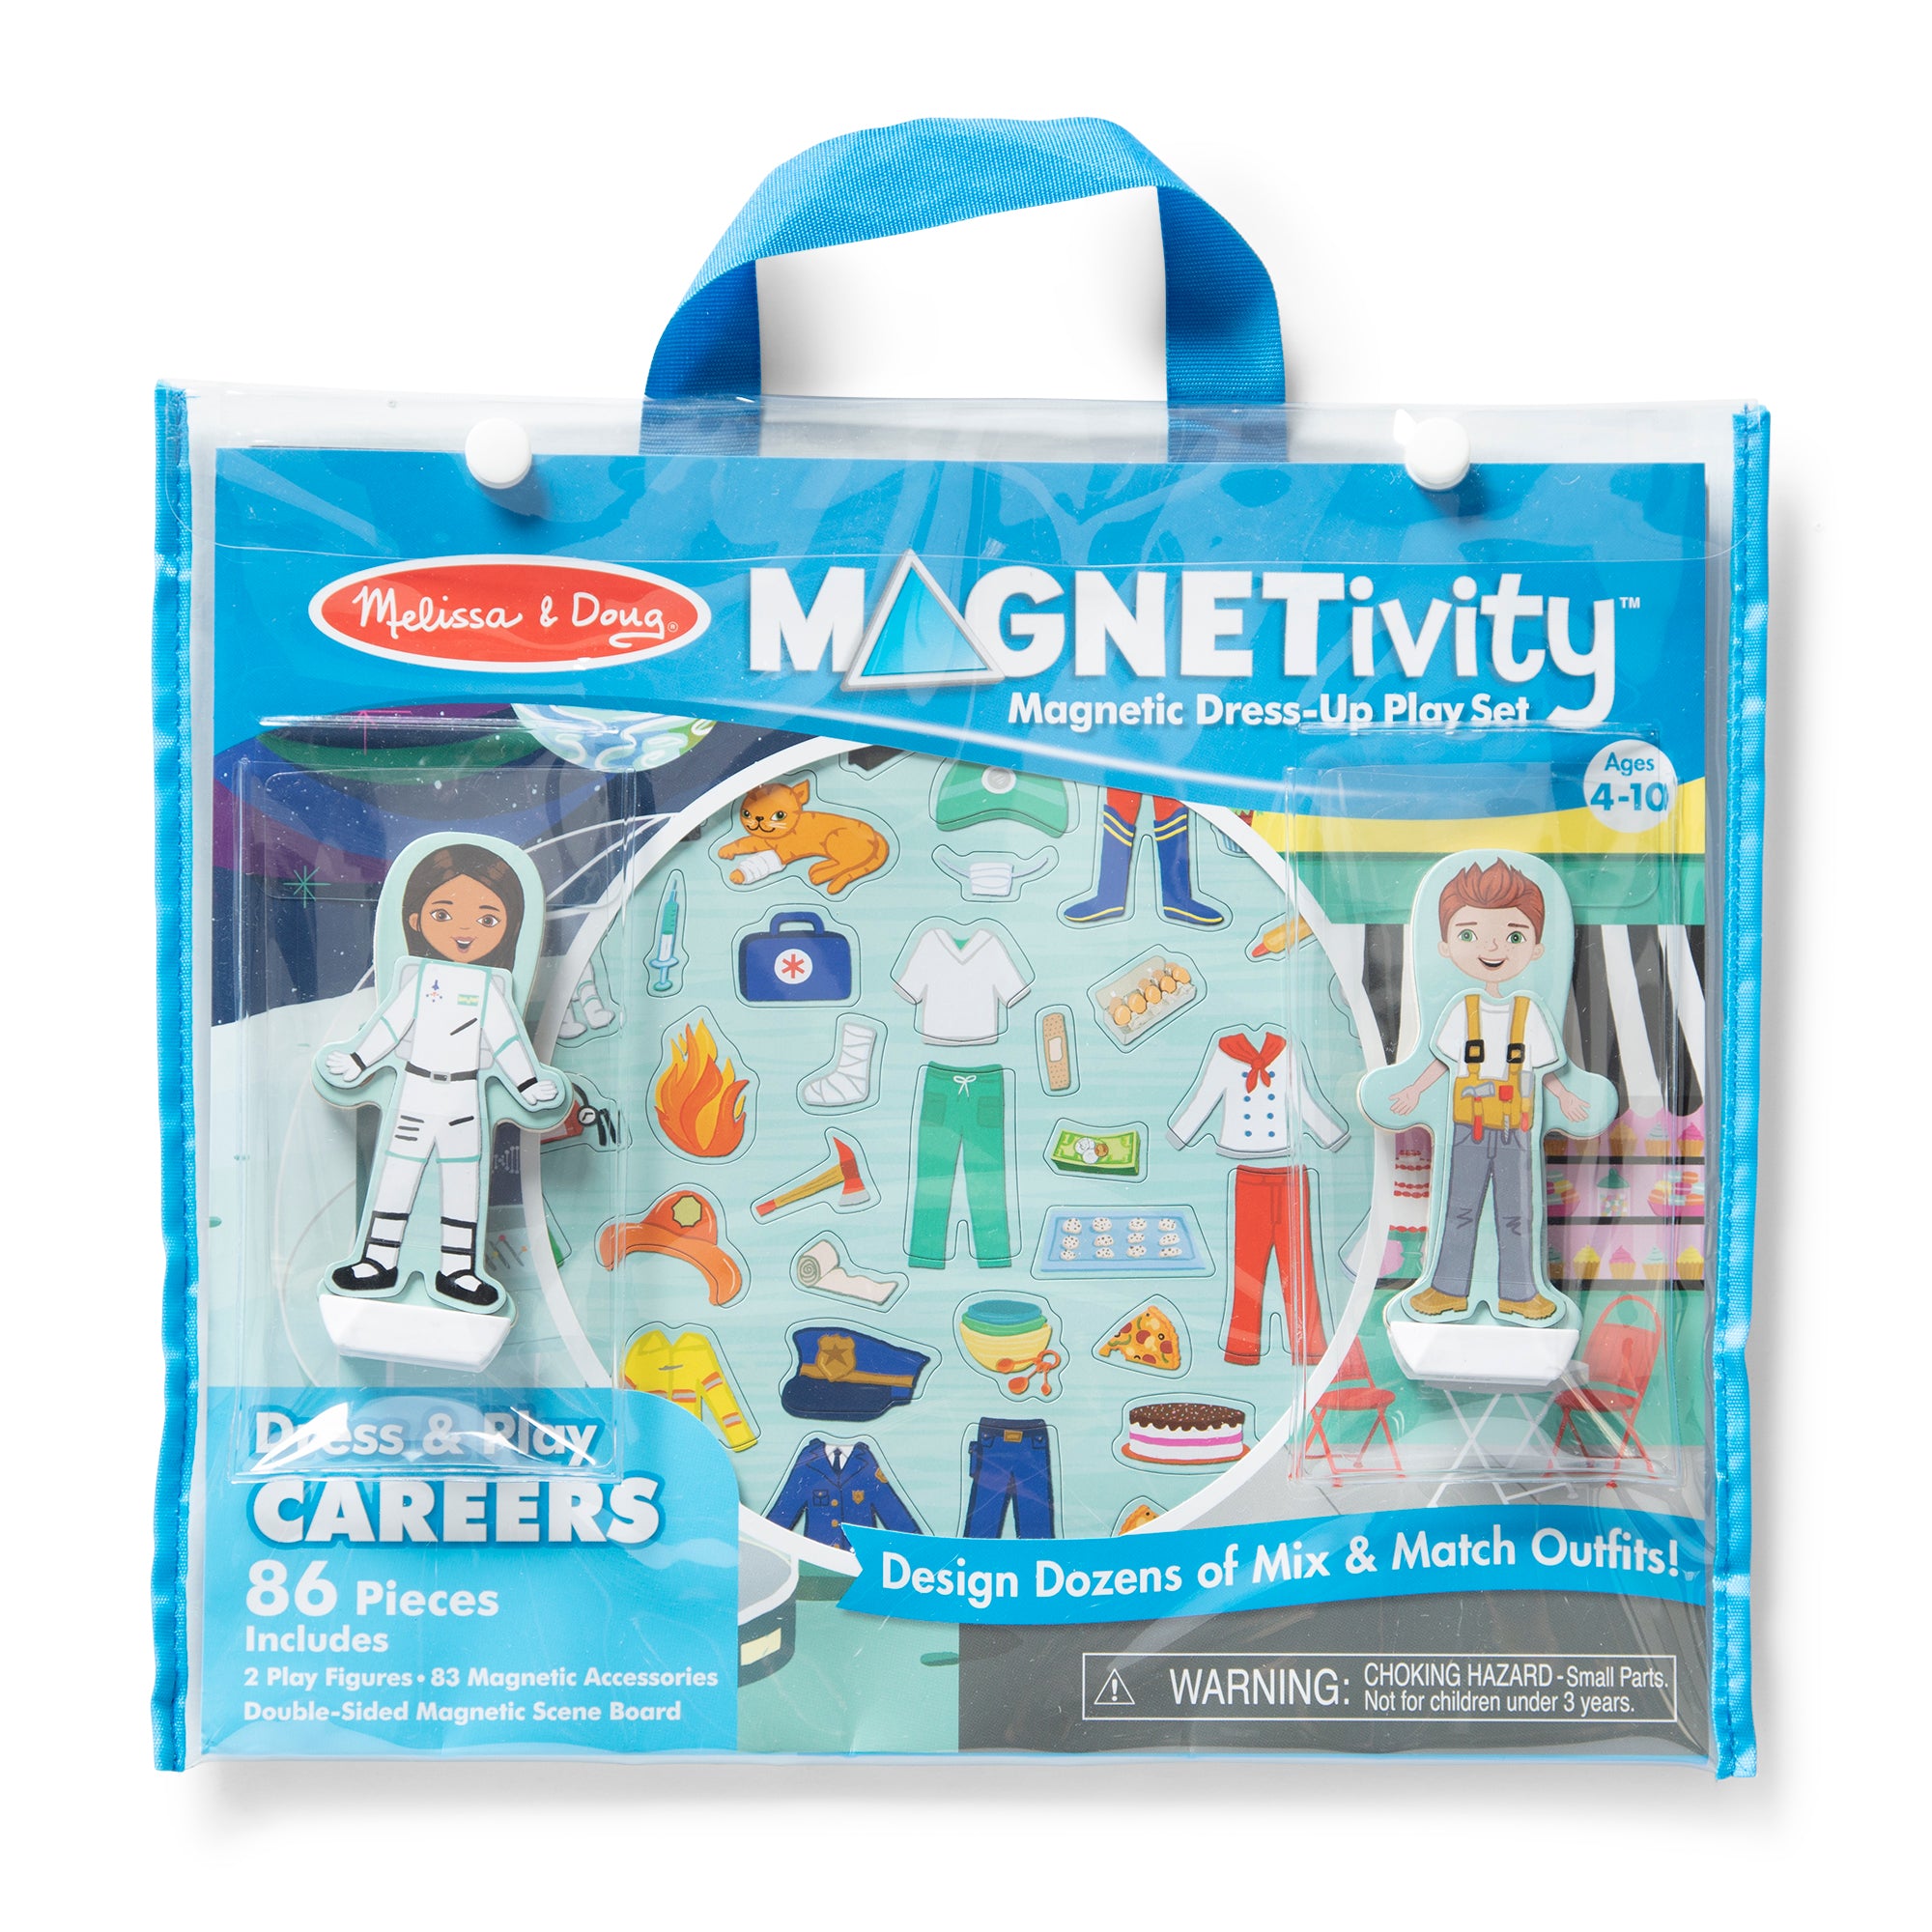 Magnetivity Dress & Play Careers